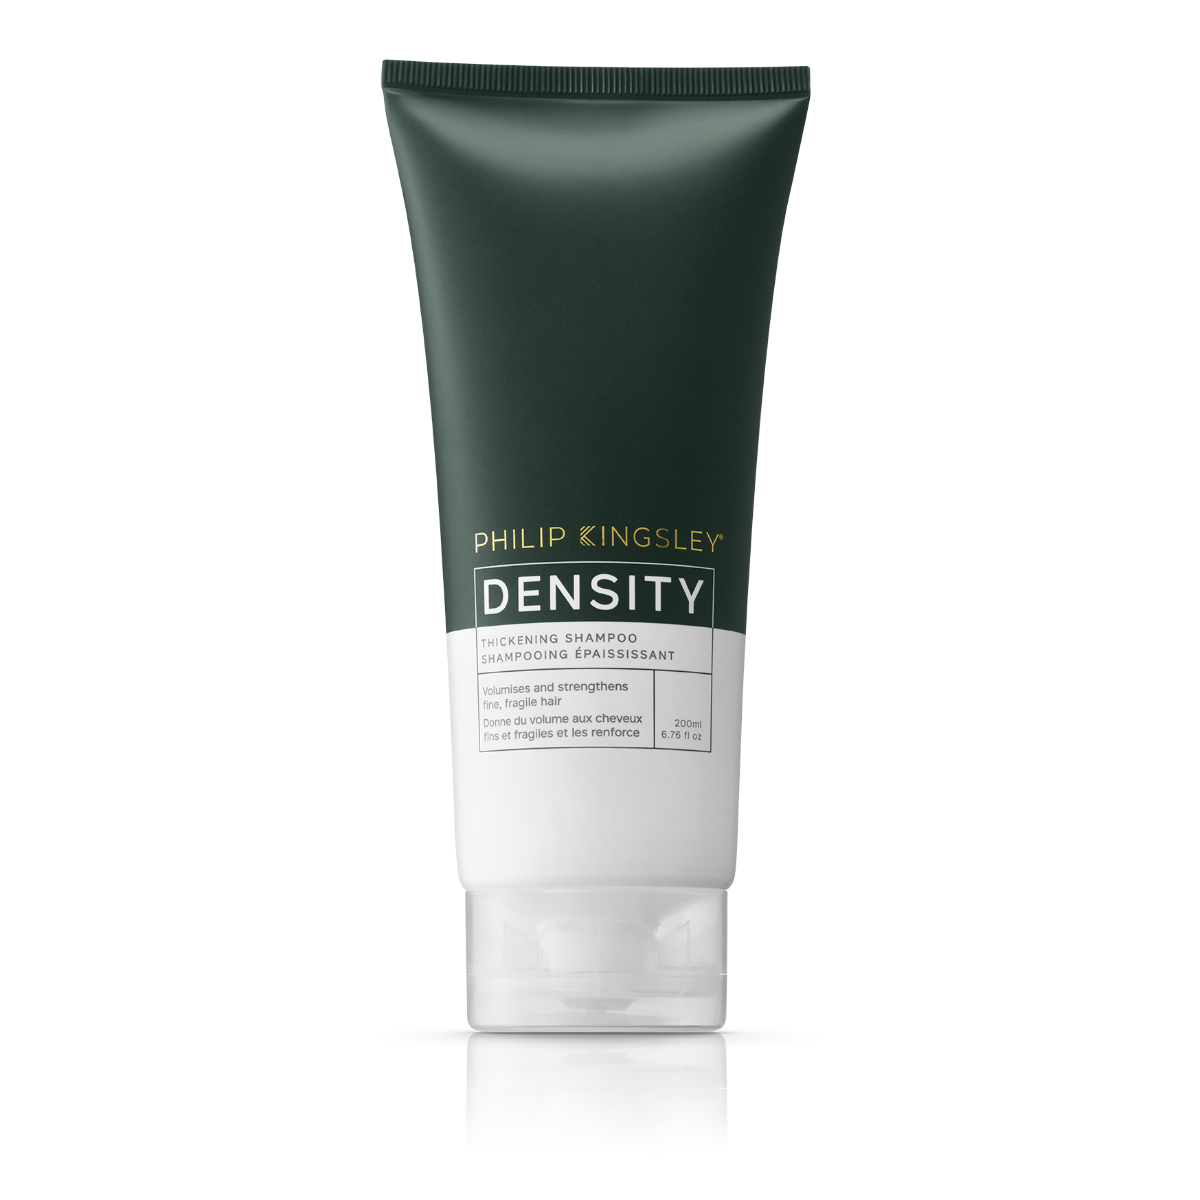 Density | The Best Hair Thickening Shampoo | Philip Kingsley